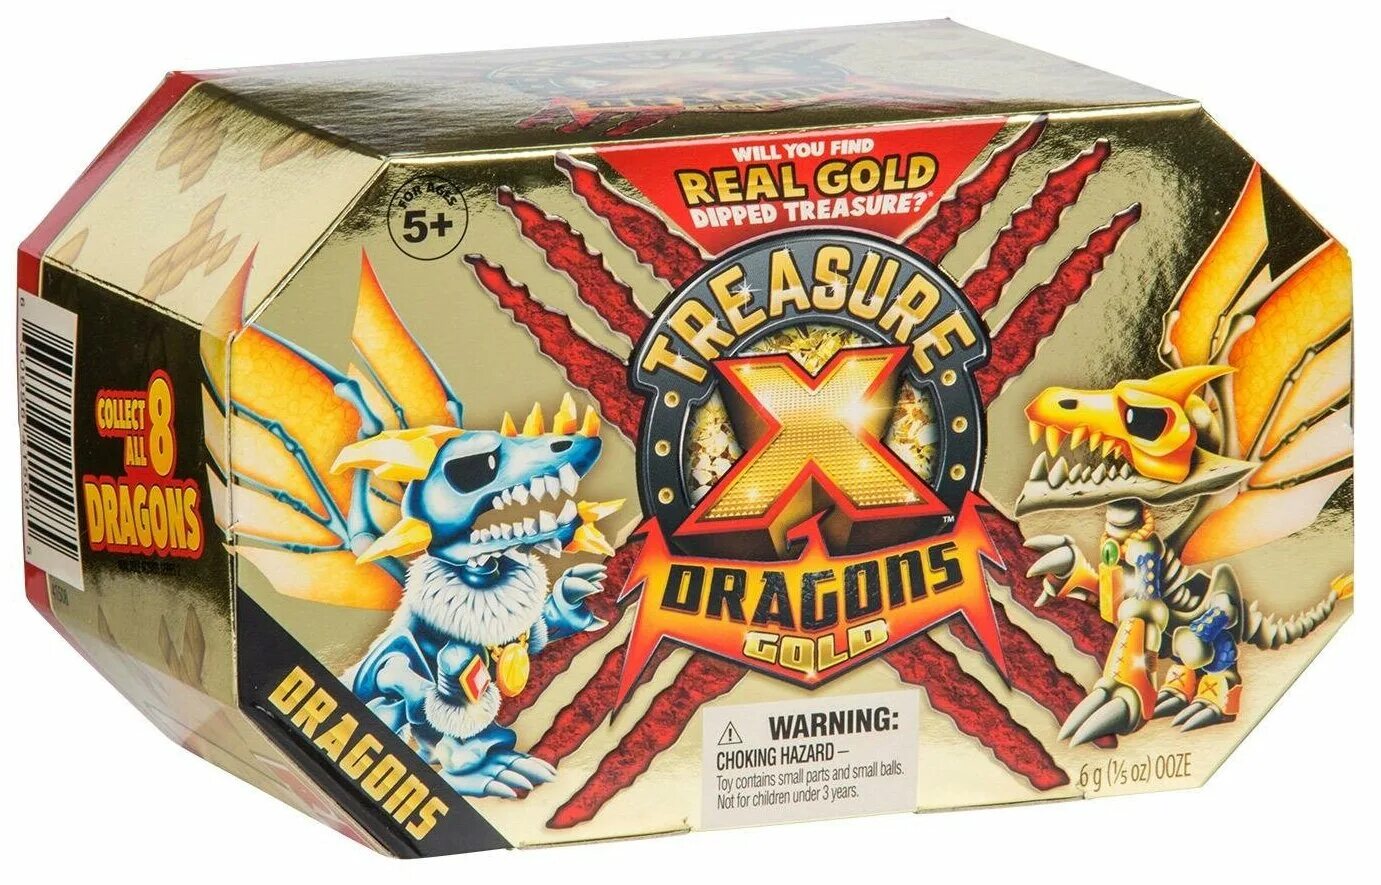 Treasure x gold. Трежер x золото драконов. 41508 Набор Treasure x "золото драконов" (дракон + сокровище). Набор Treasure x "золото драконов" (охотник + сокровище).